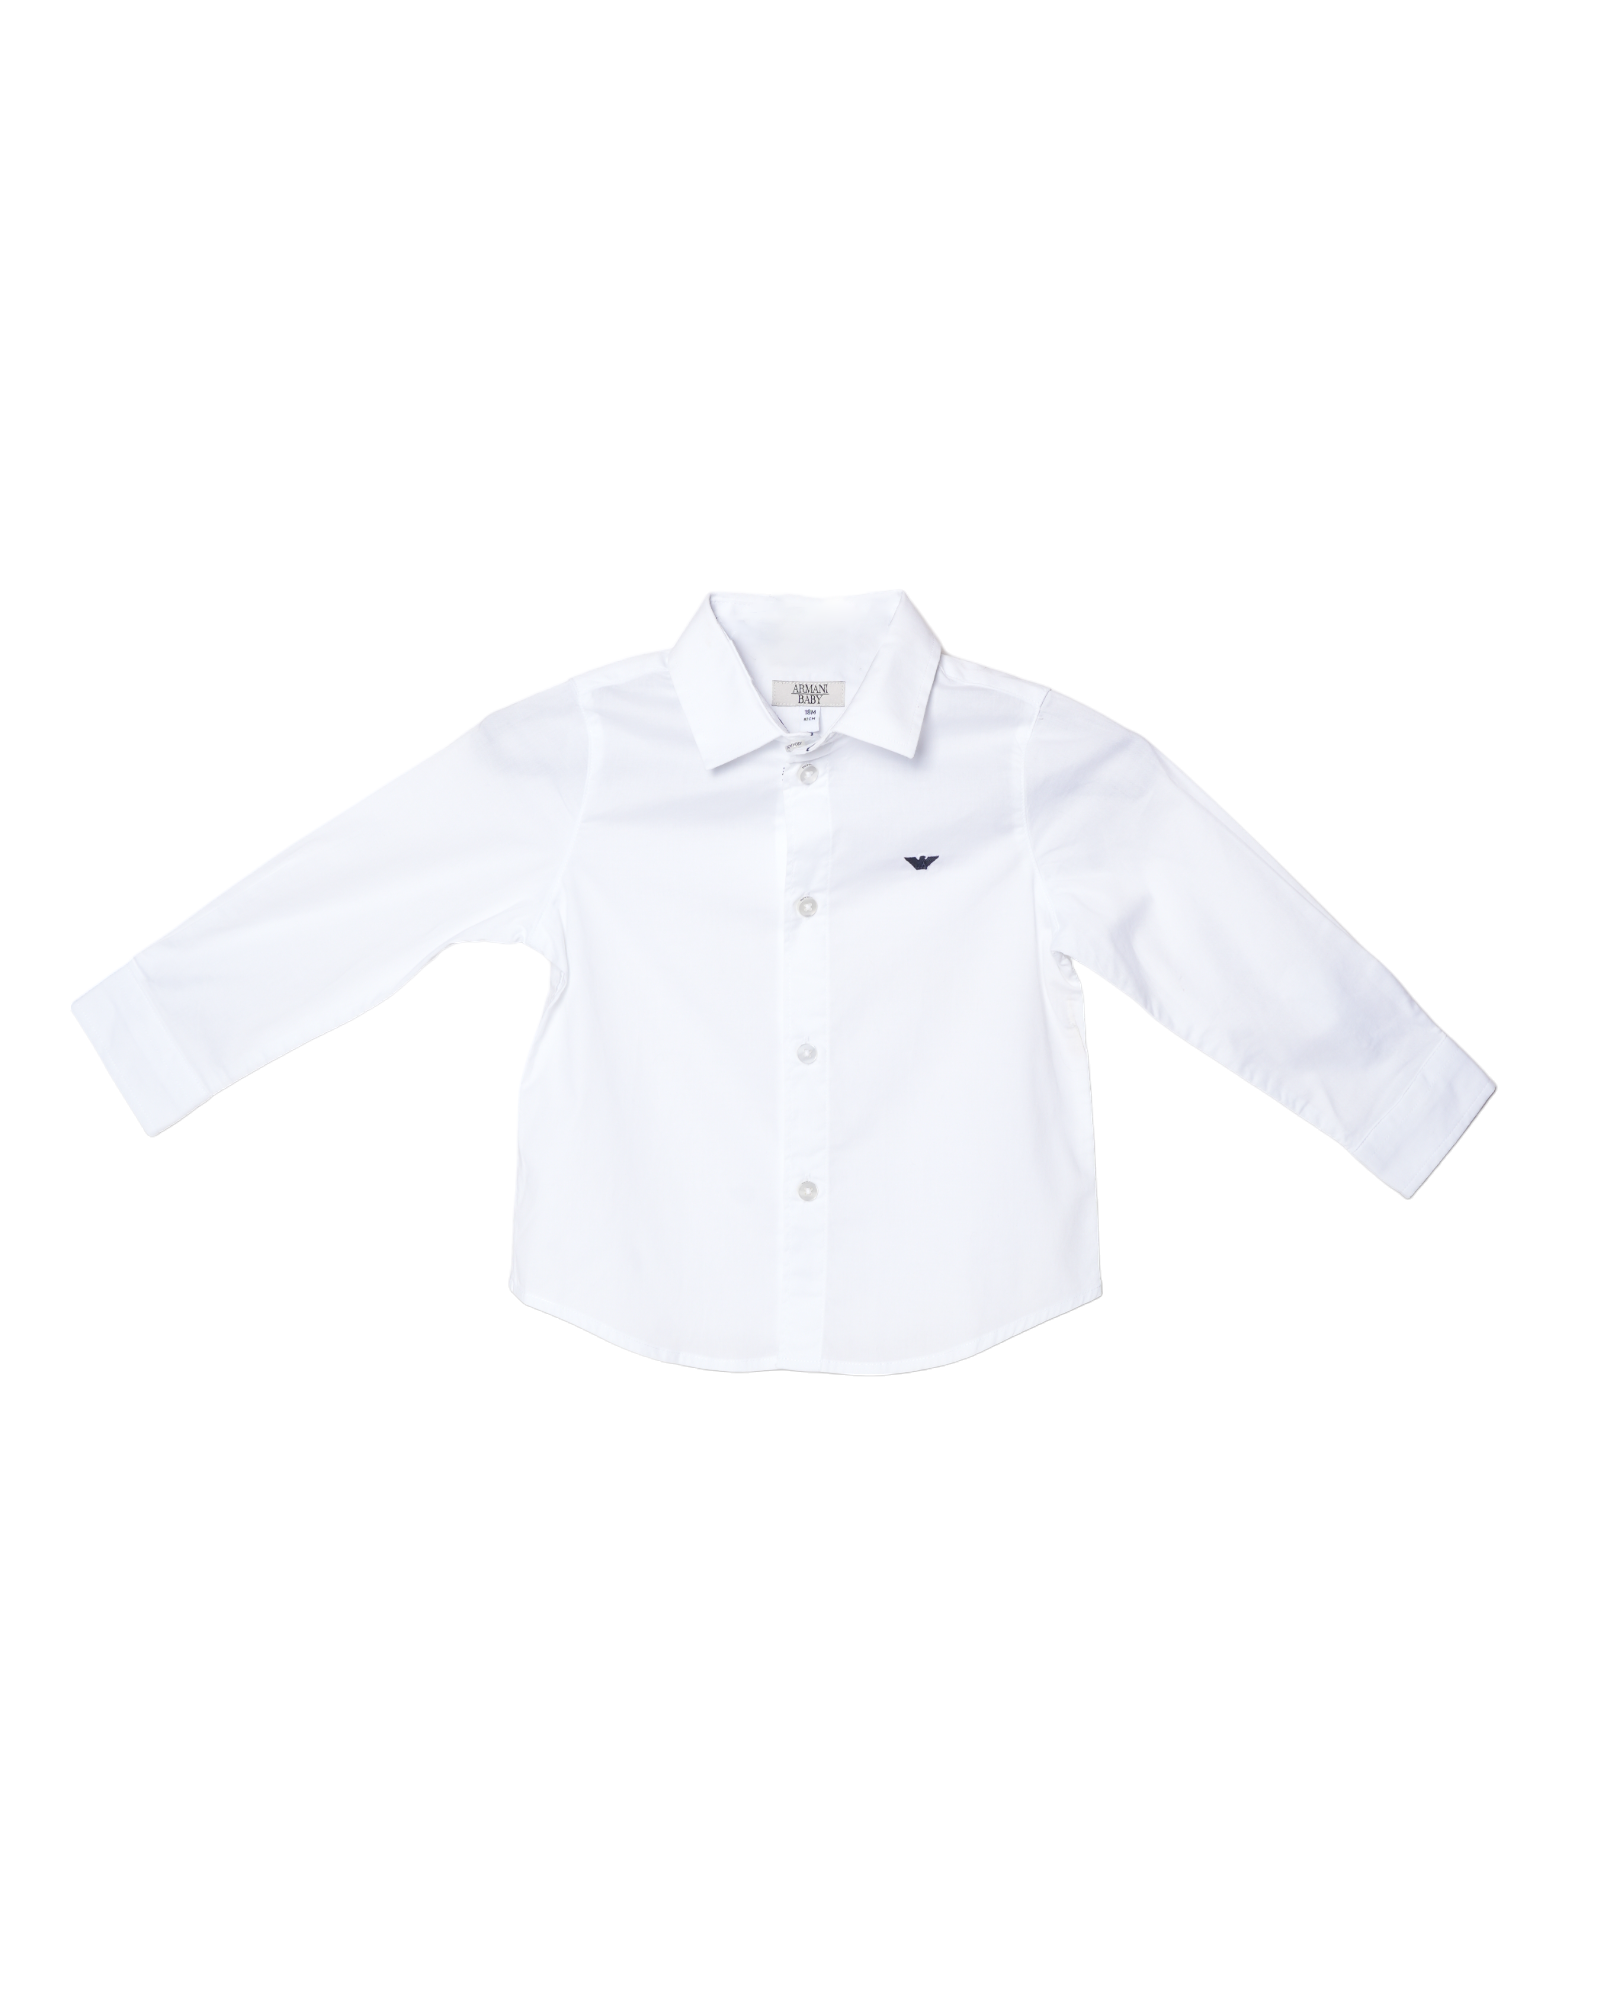 Armani White Plain Shirt